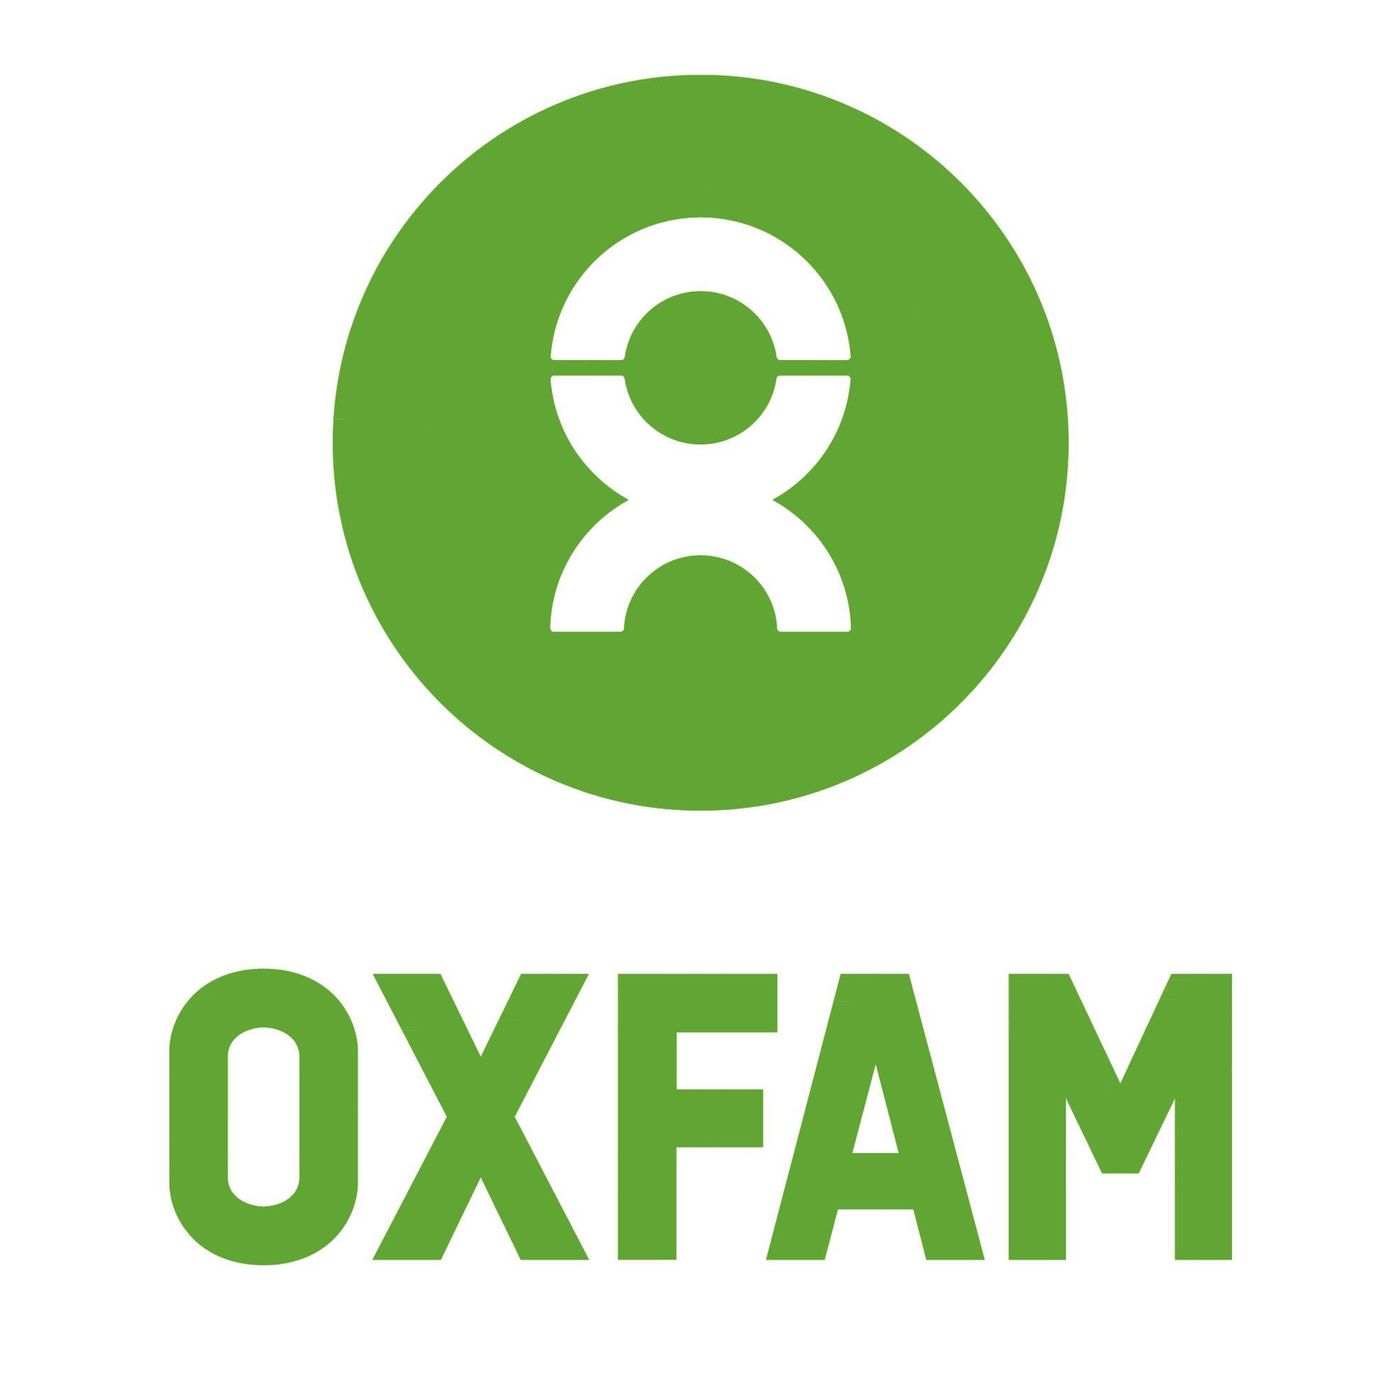 OxfamCymru